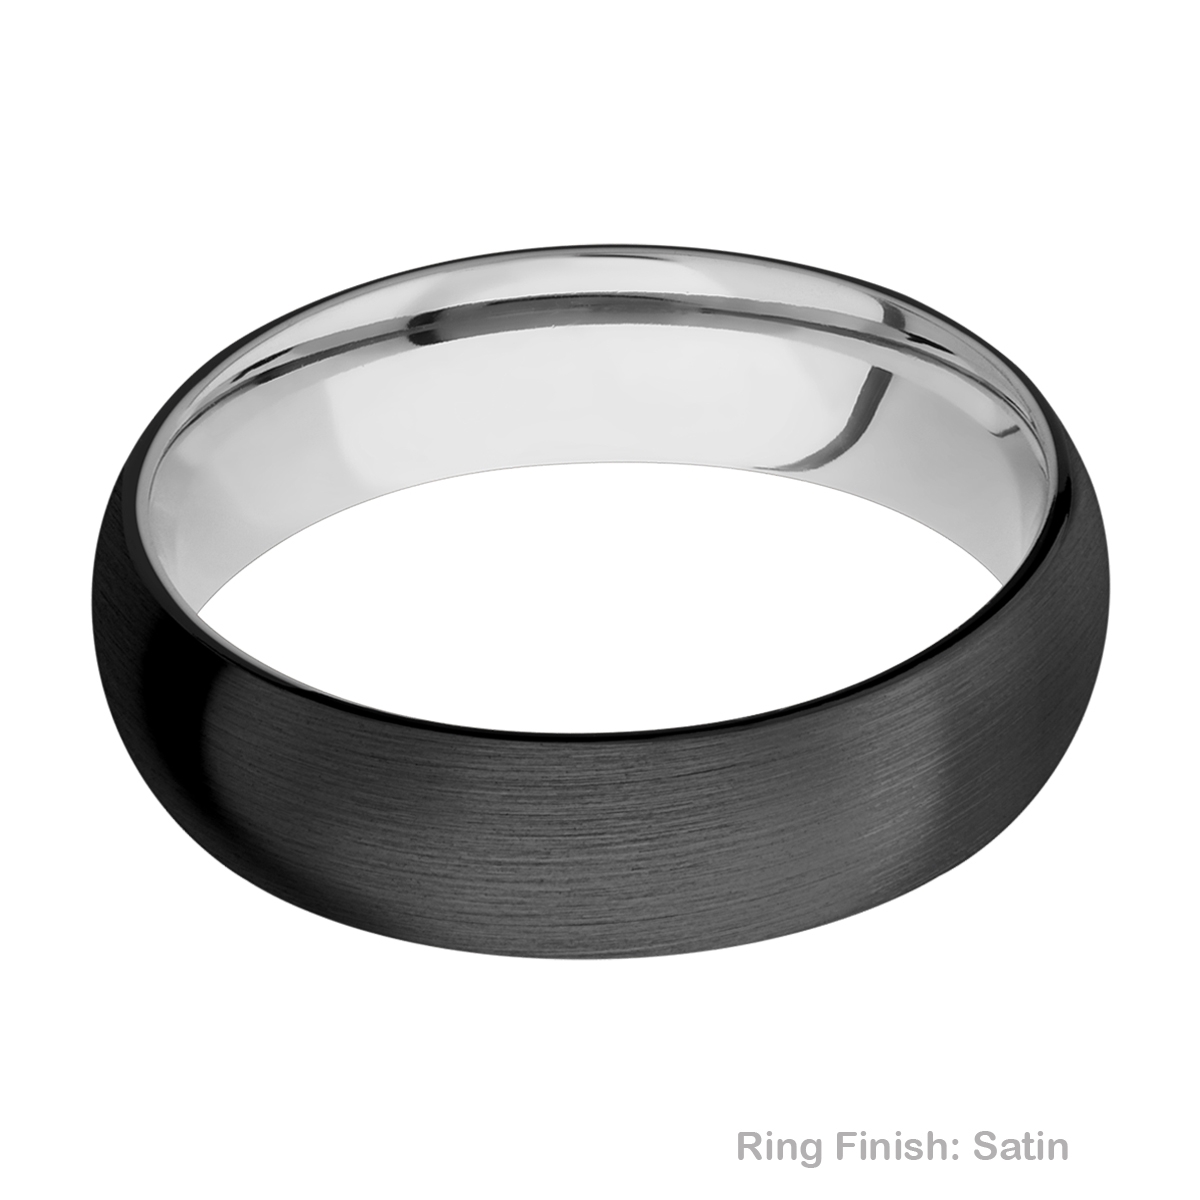 Lashbrook CCSLEEVEZ6D Zirconium and Cobalt Chrome Wedding Ring or Band